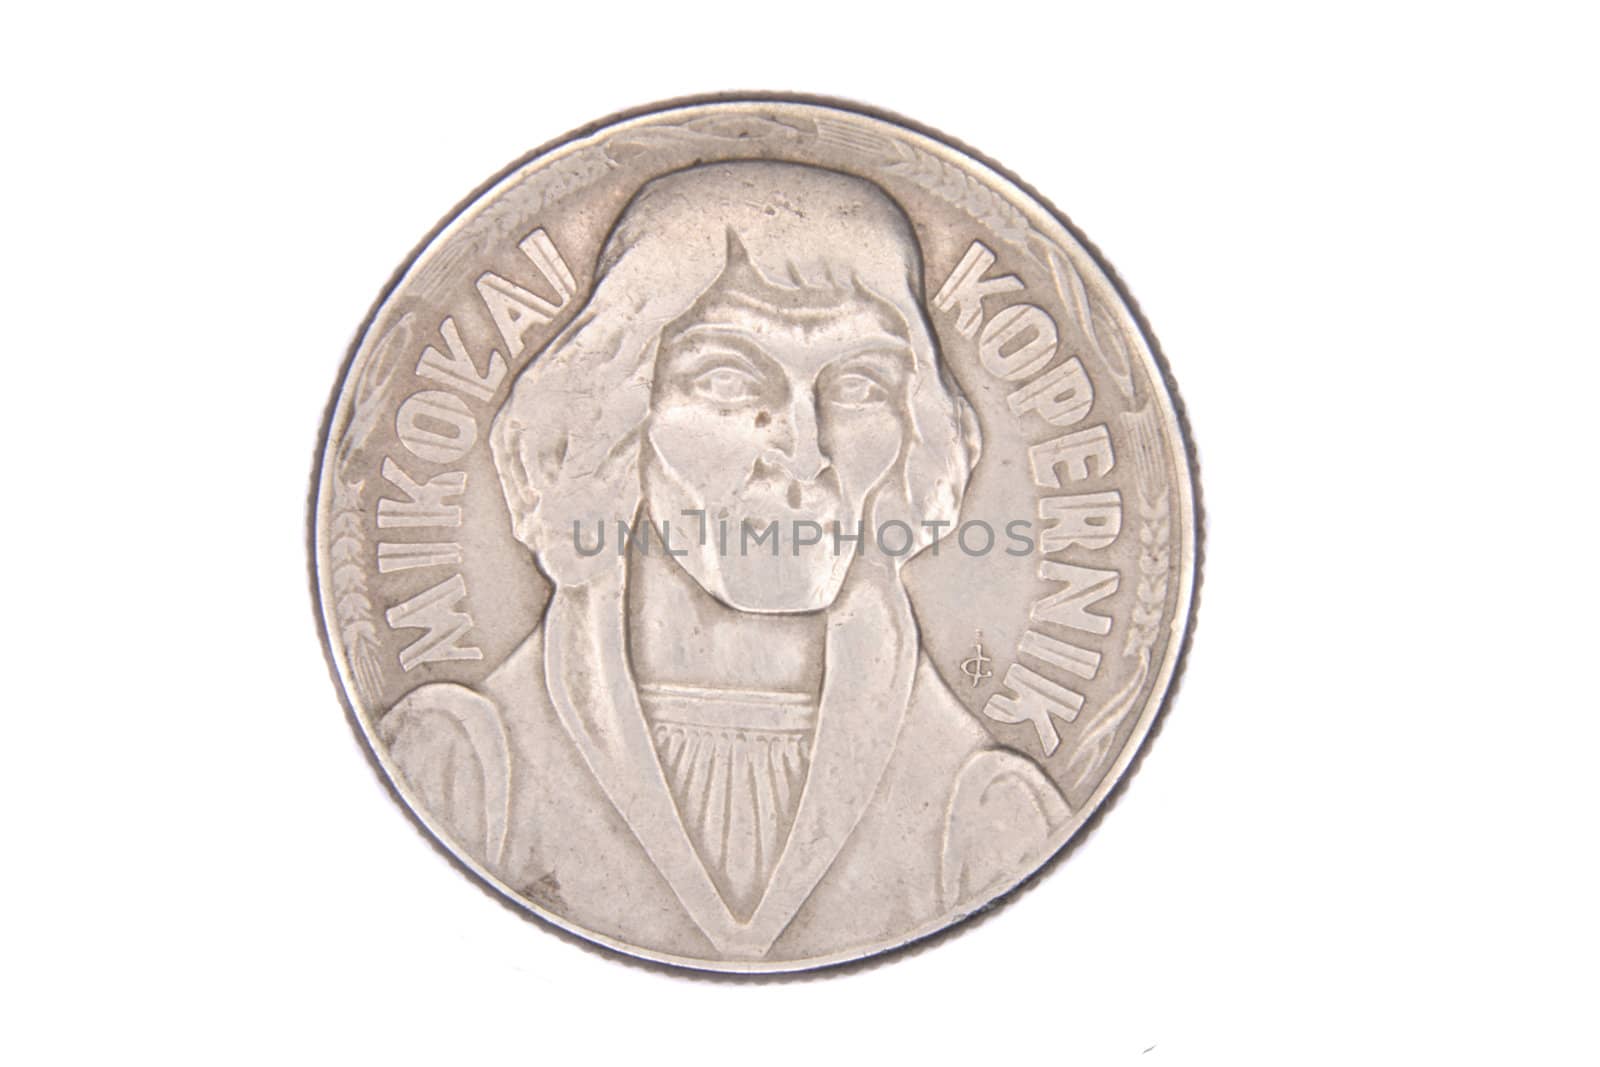 silver coin by jonnysek